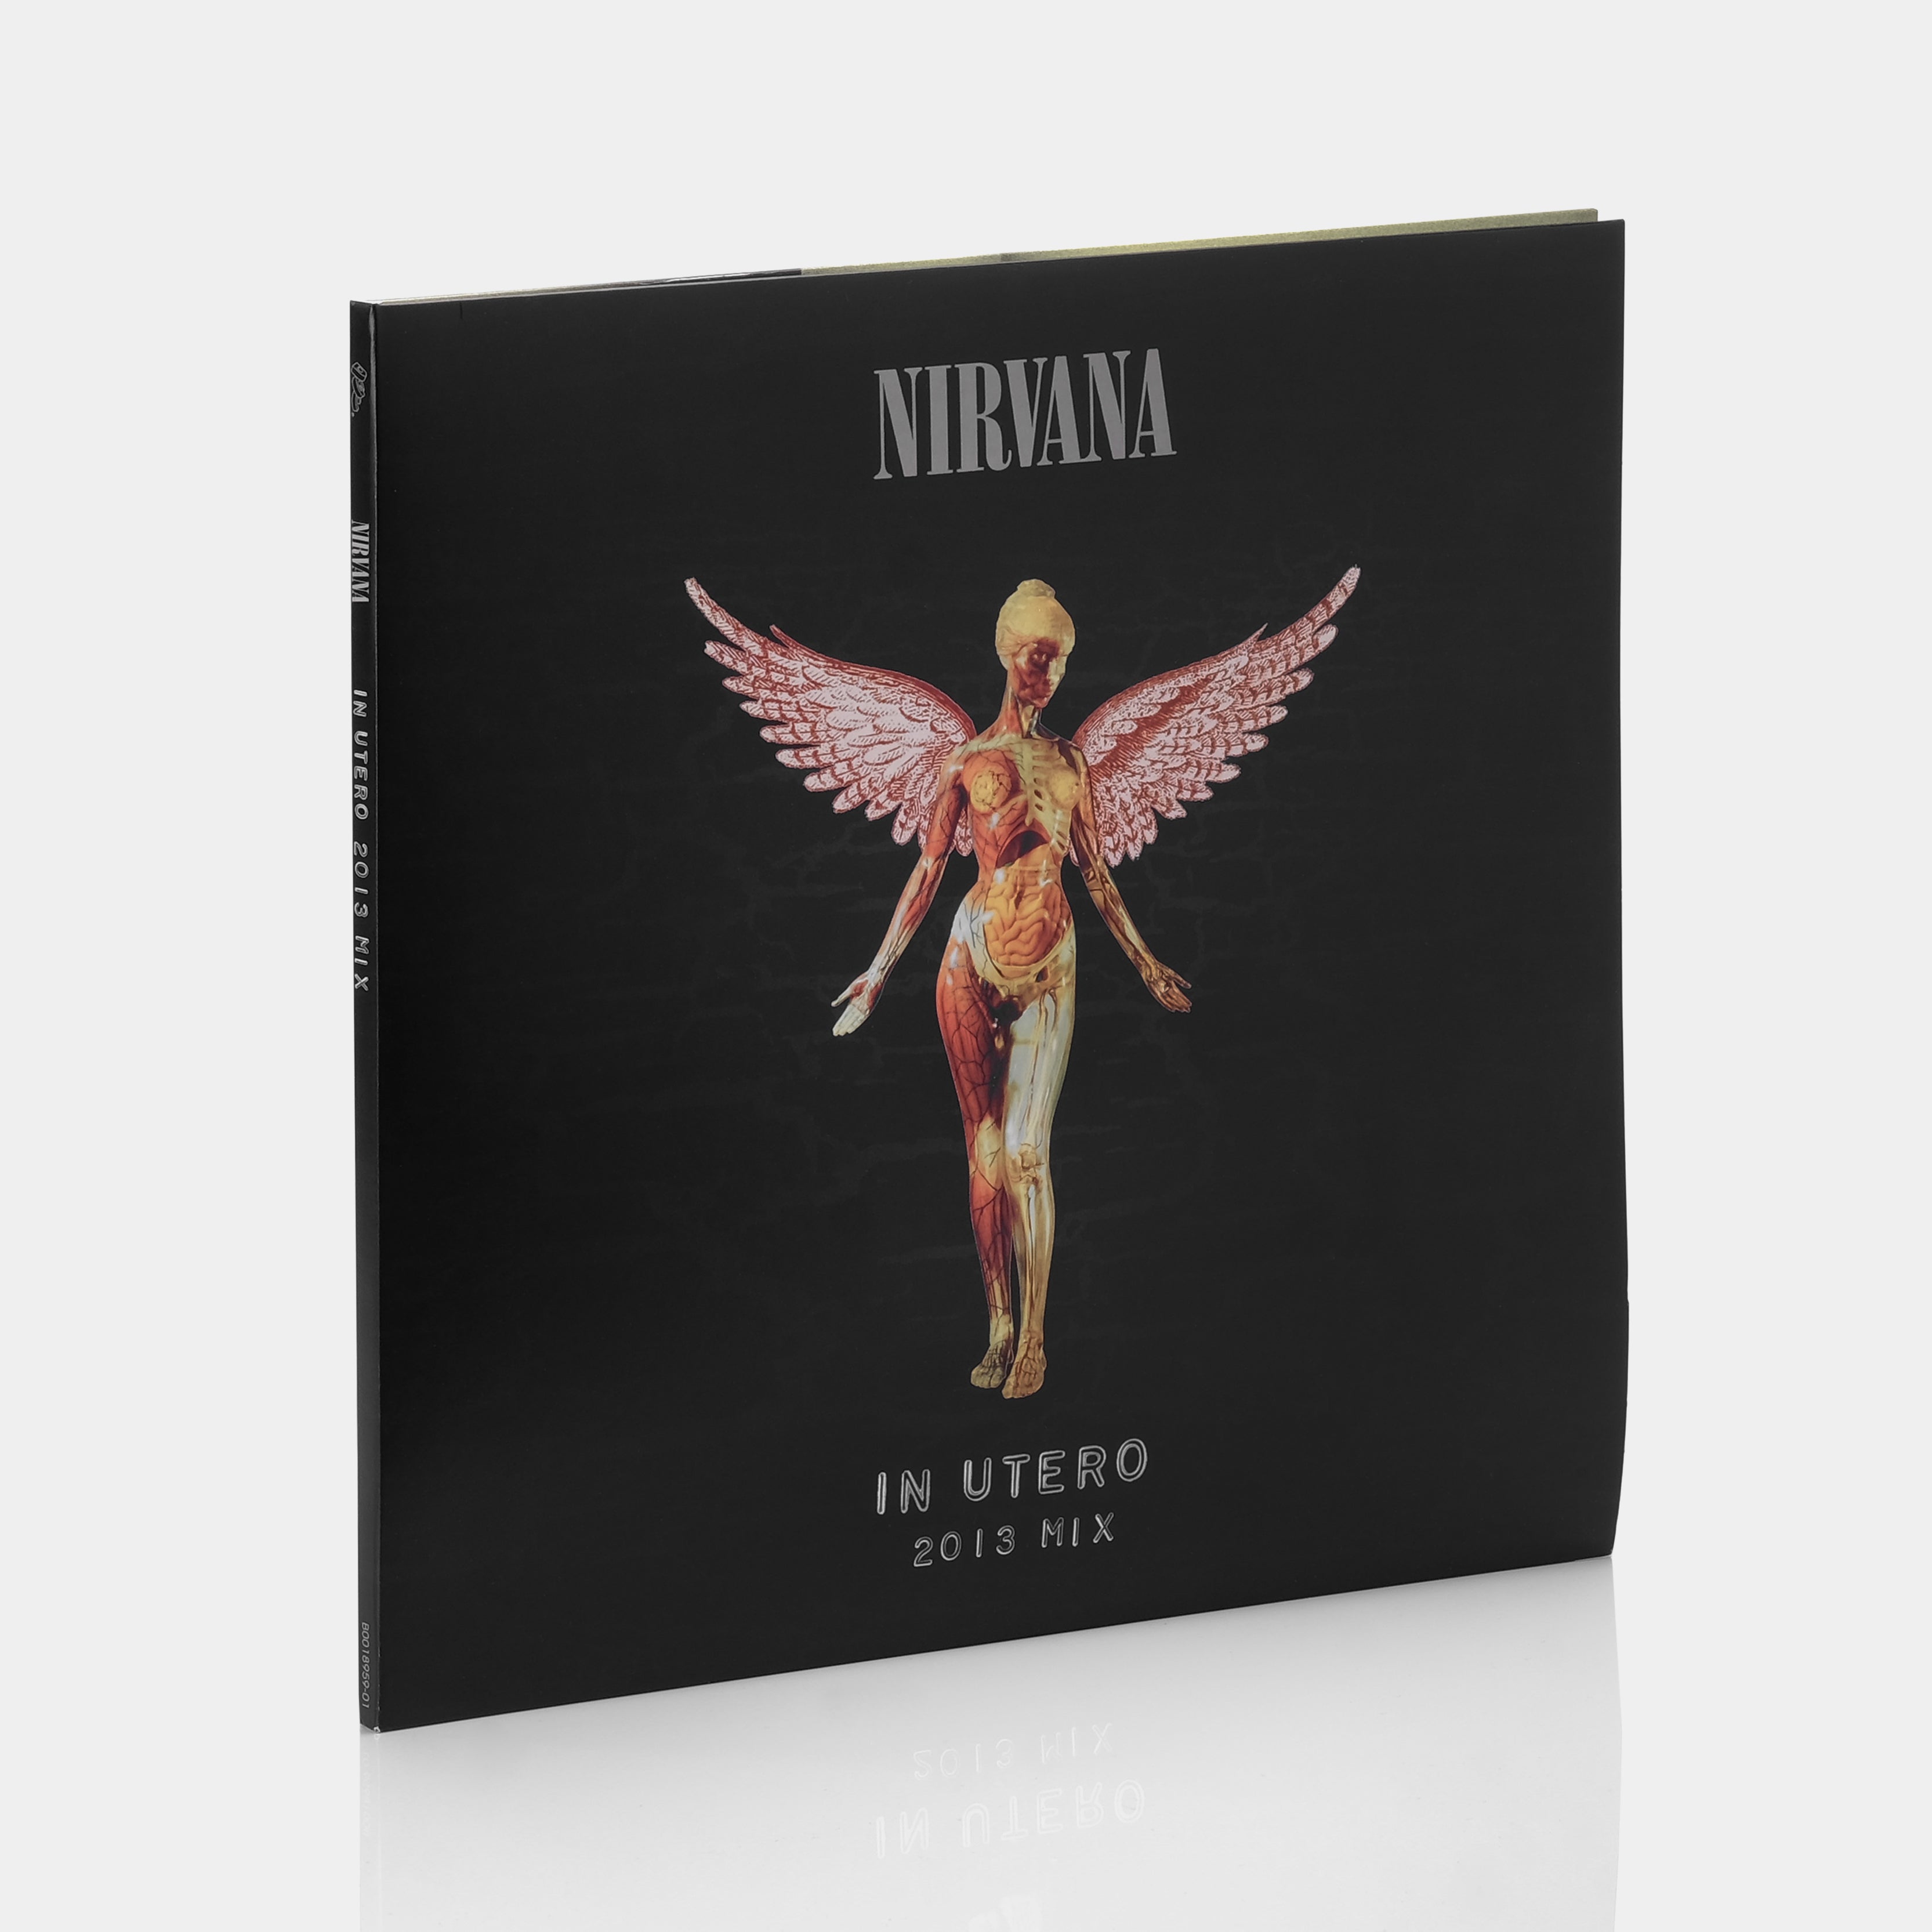 Nirvana - In Utero 2013 Mix (20th Anniversary Addition) 2xLP Vinyl Record